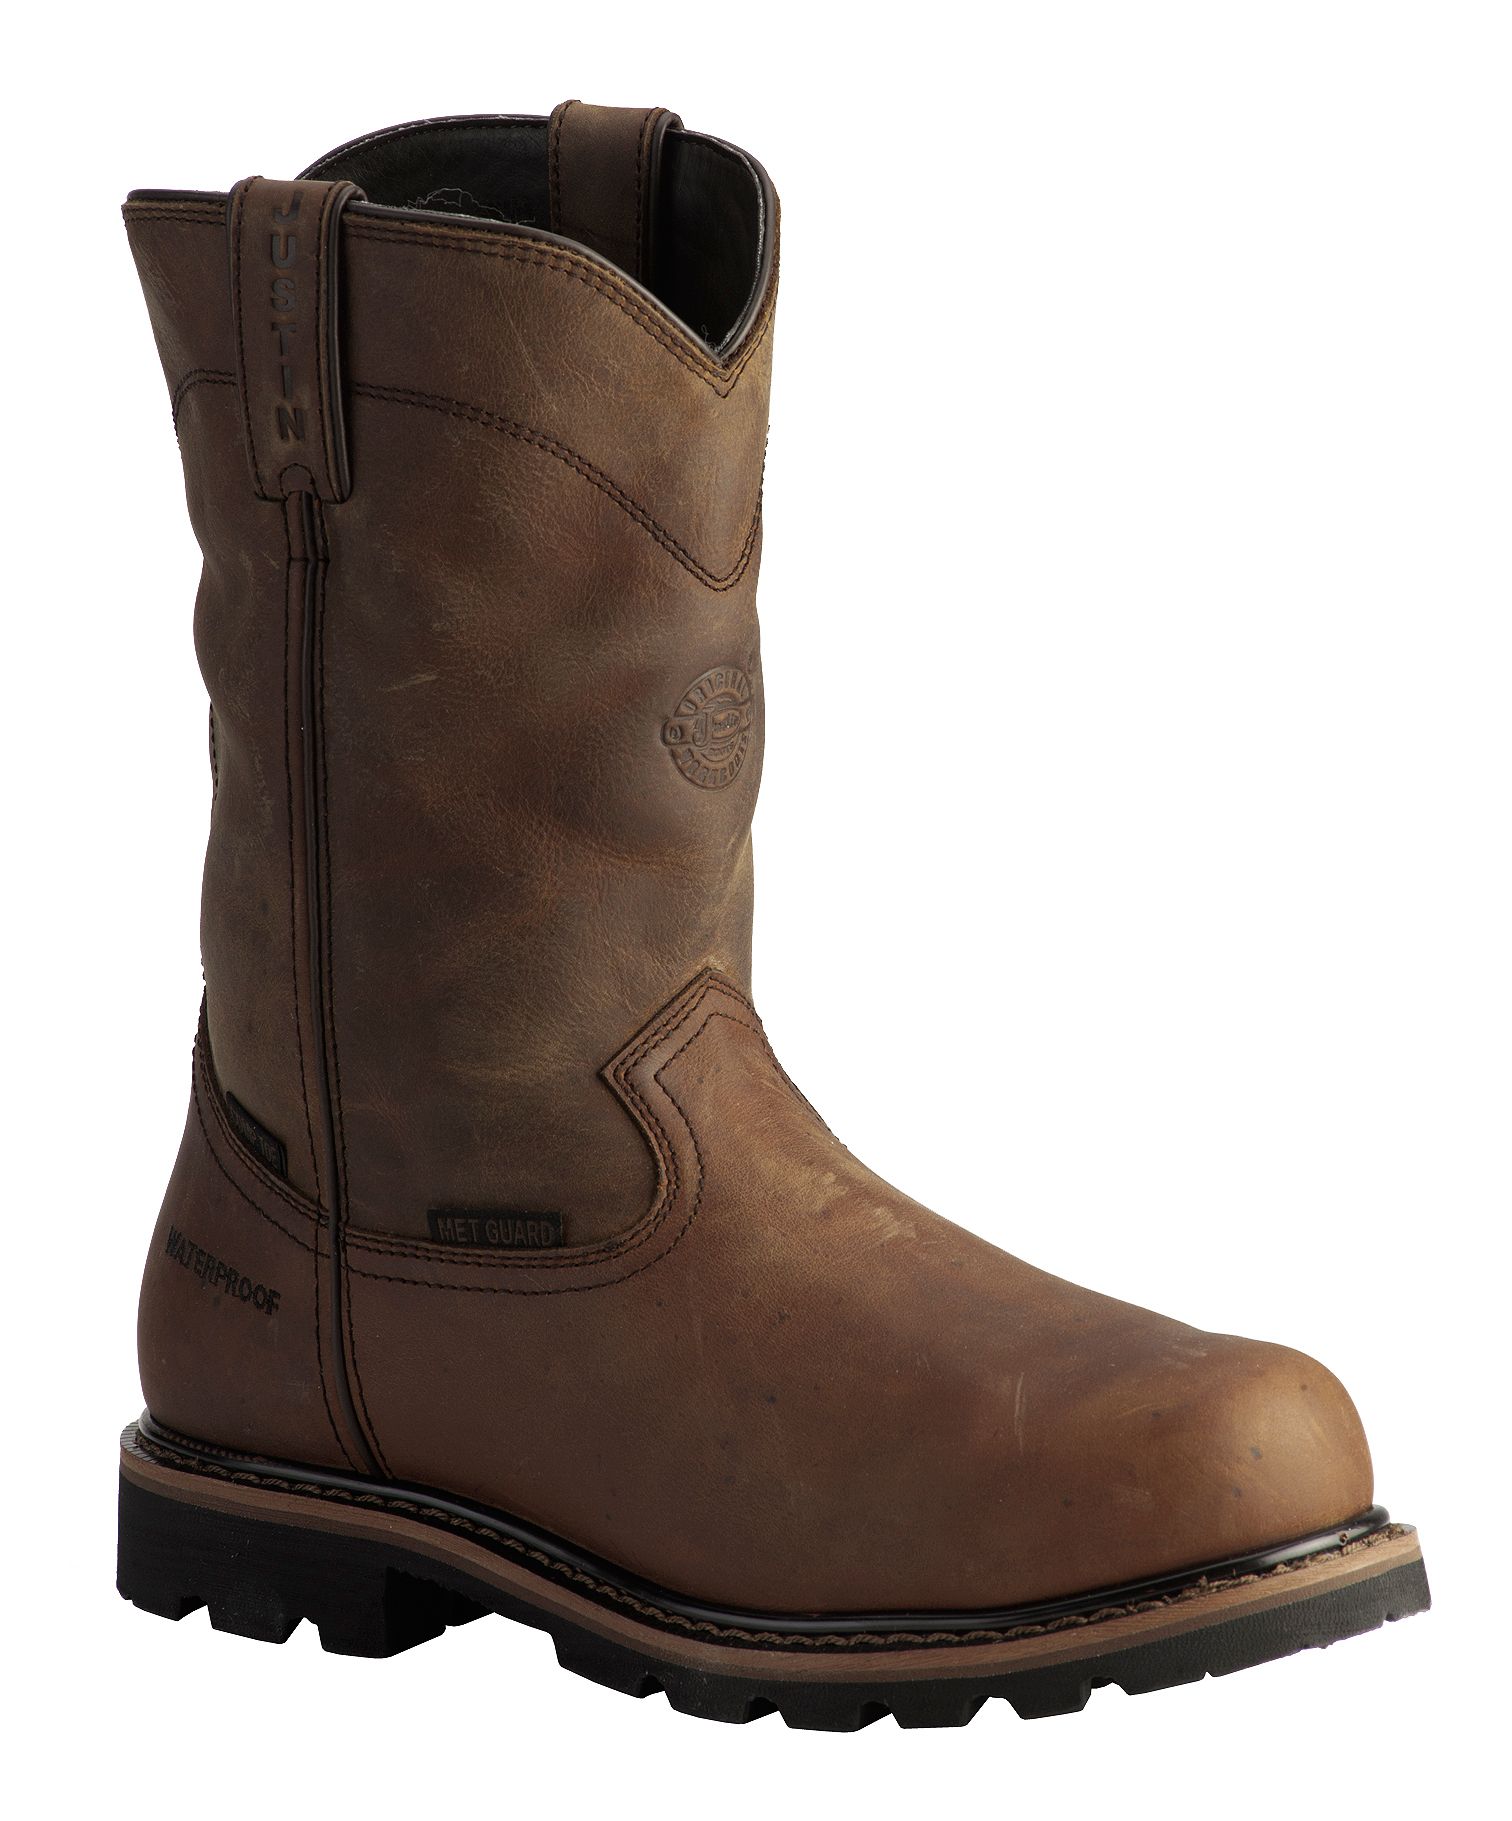 Justin Men's Pulley Waterproof MetGuard Pull-On Work Boots - Composite Toe